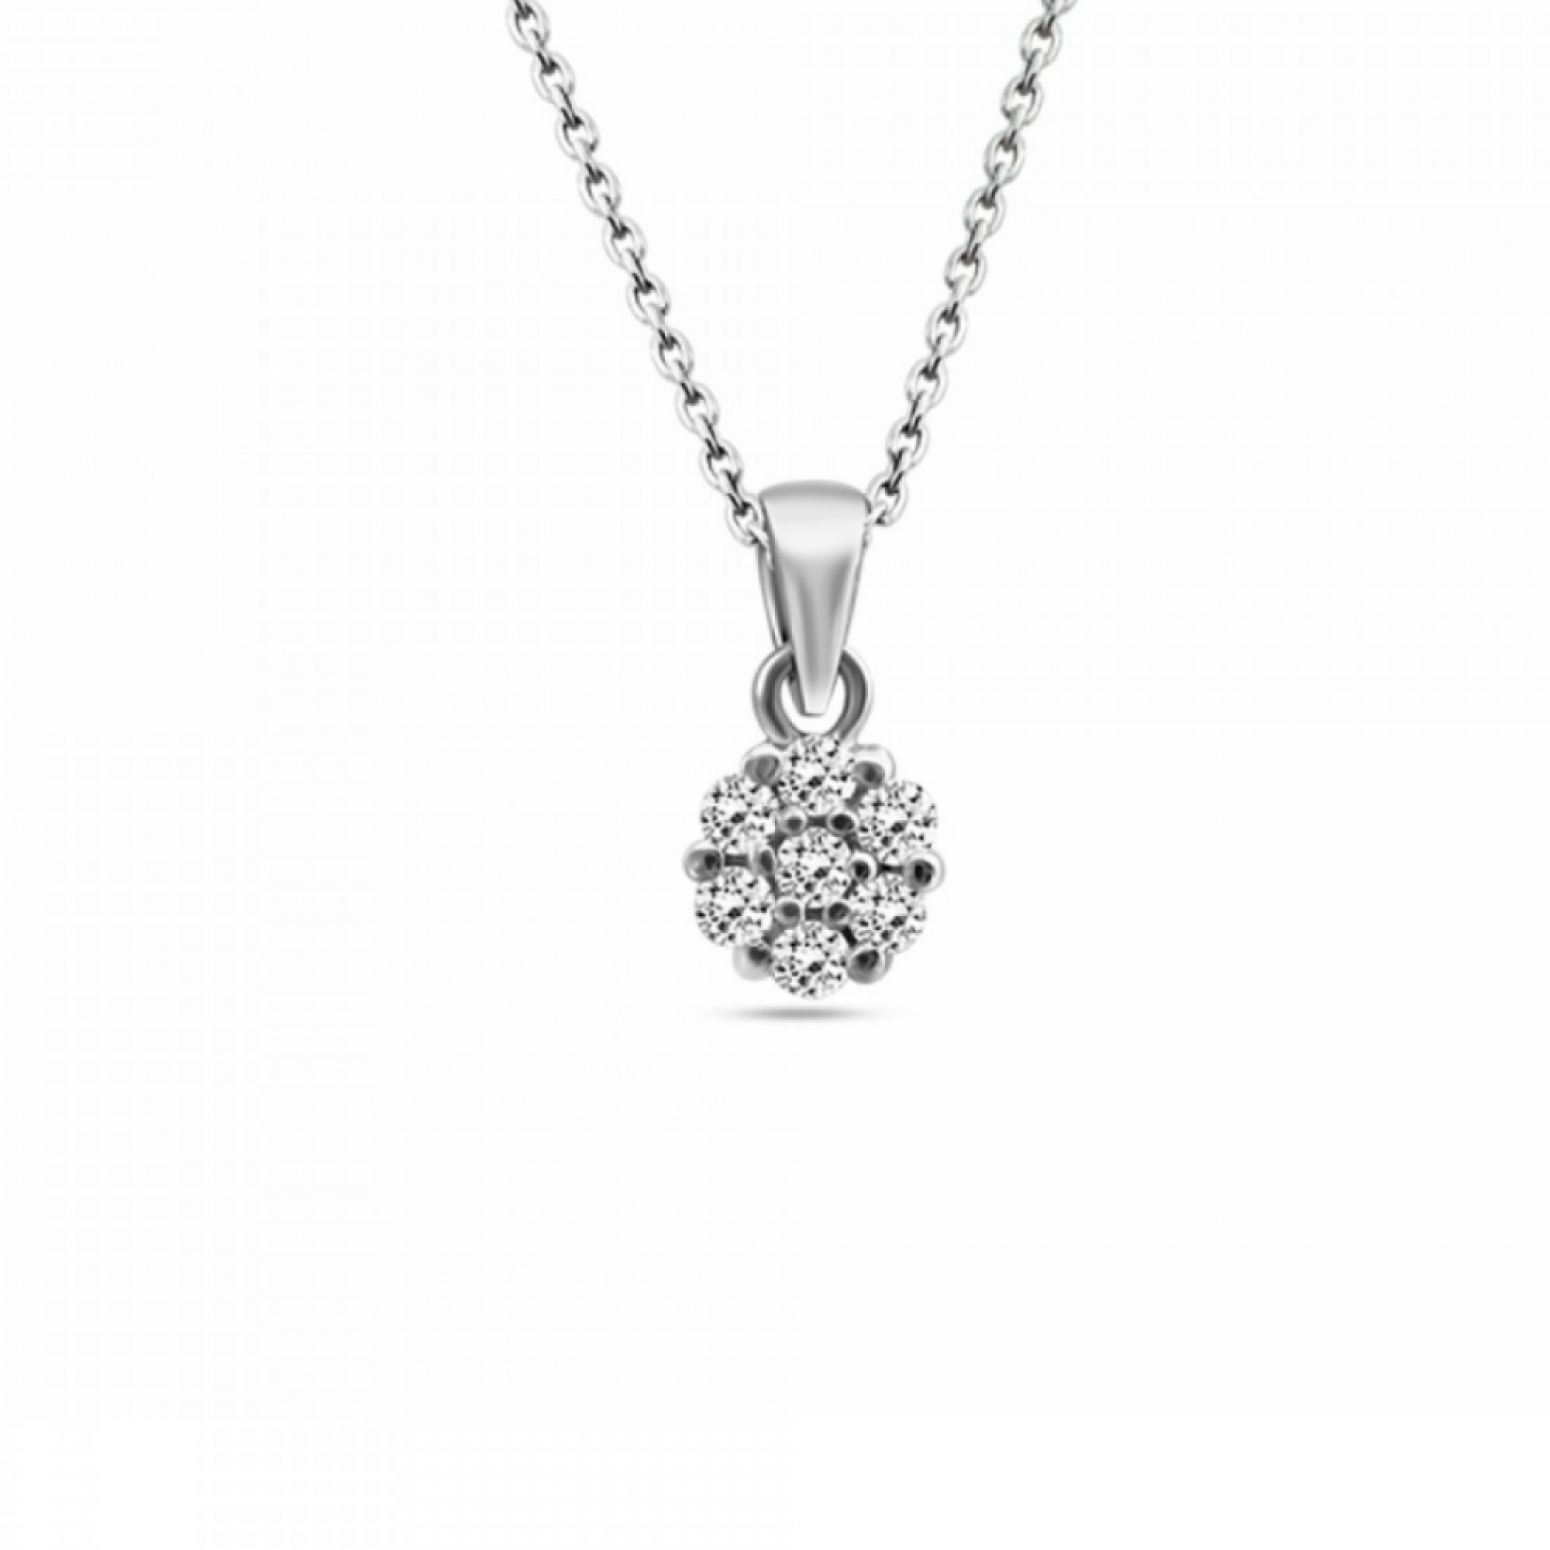 Multistone round necklace 18K white gold with diamonds 0.12ct, VS1, F/G from IGL, me2191 NECKLACES Κοσμηματα - chrilia.gr